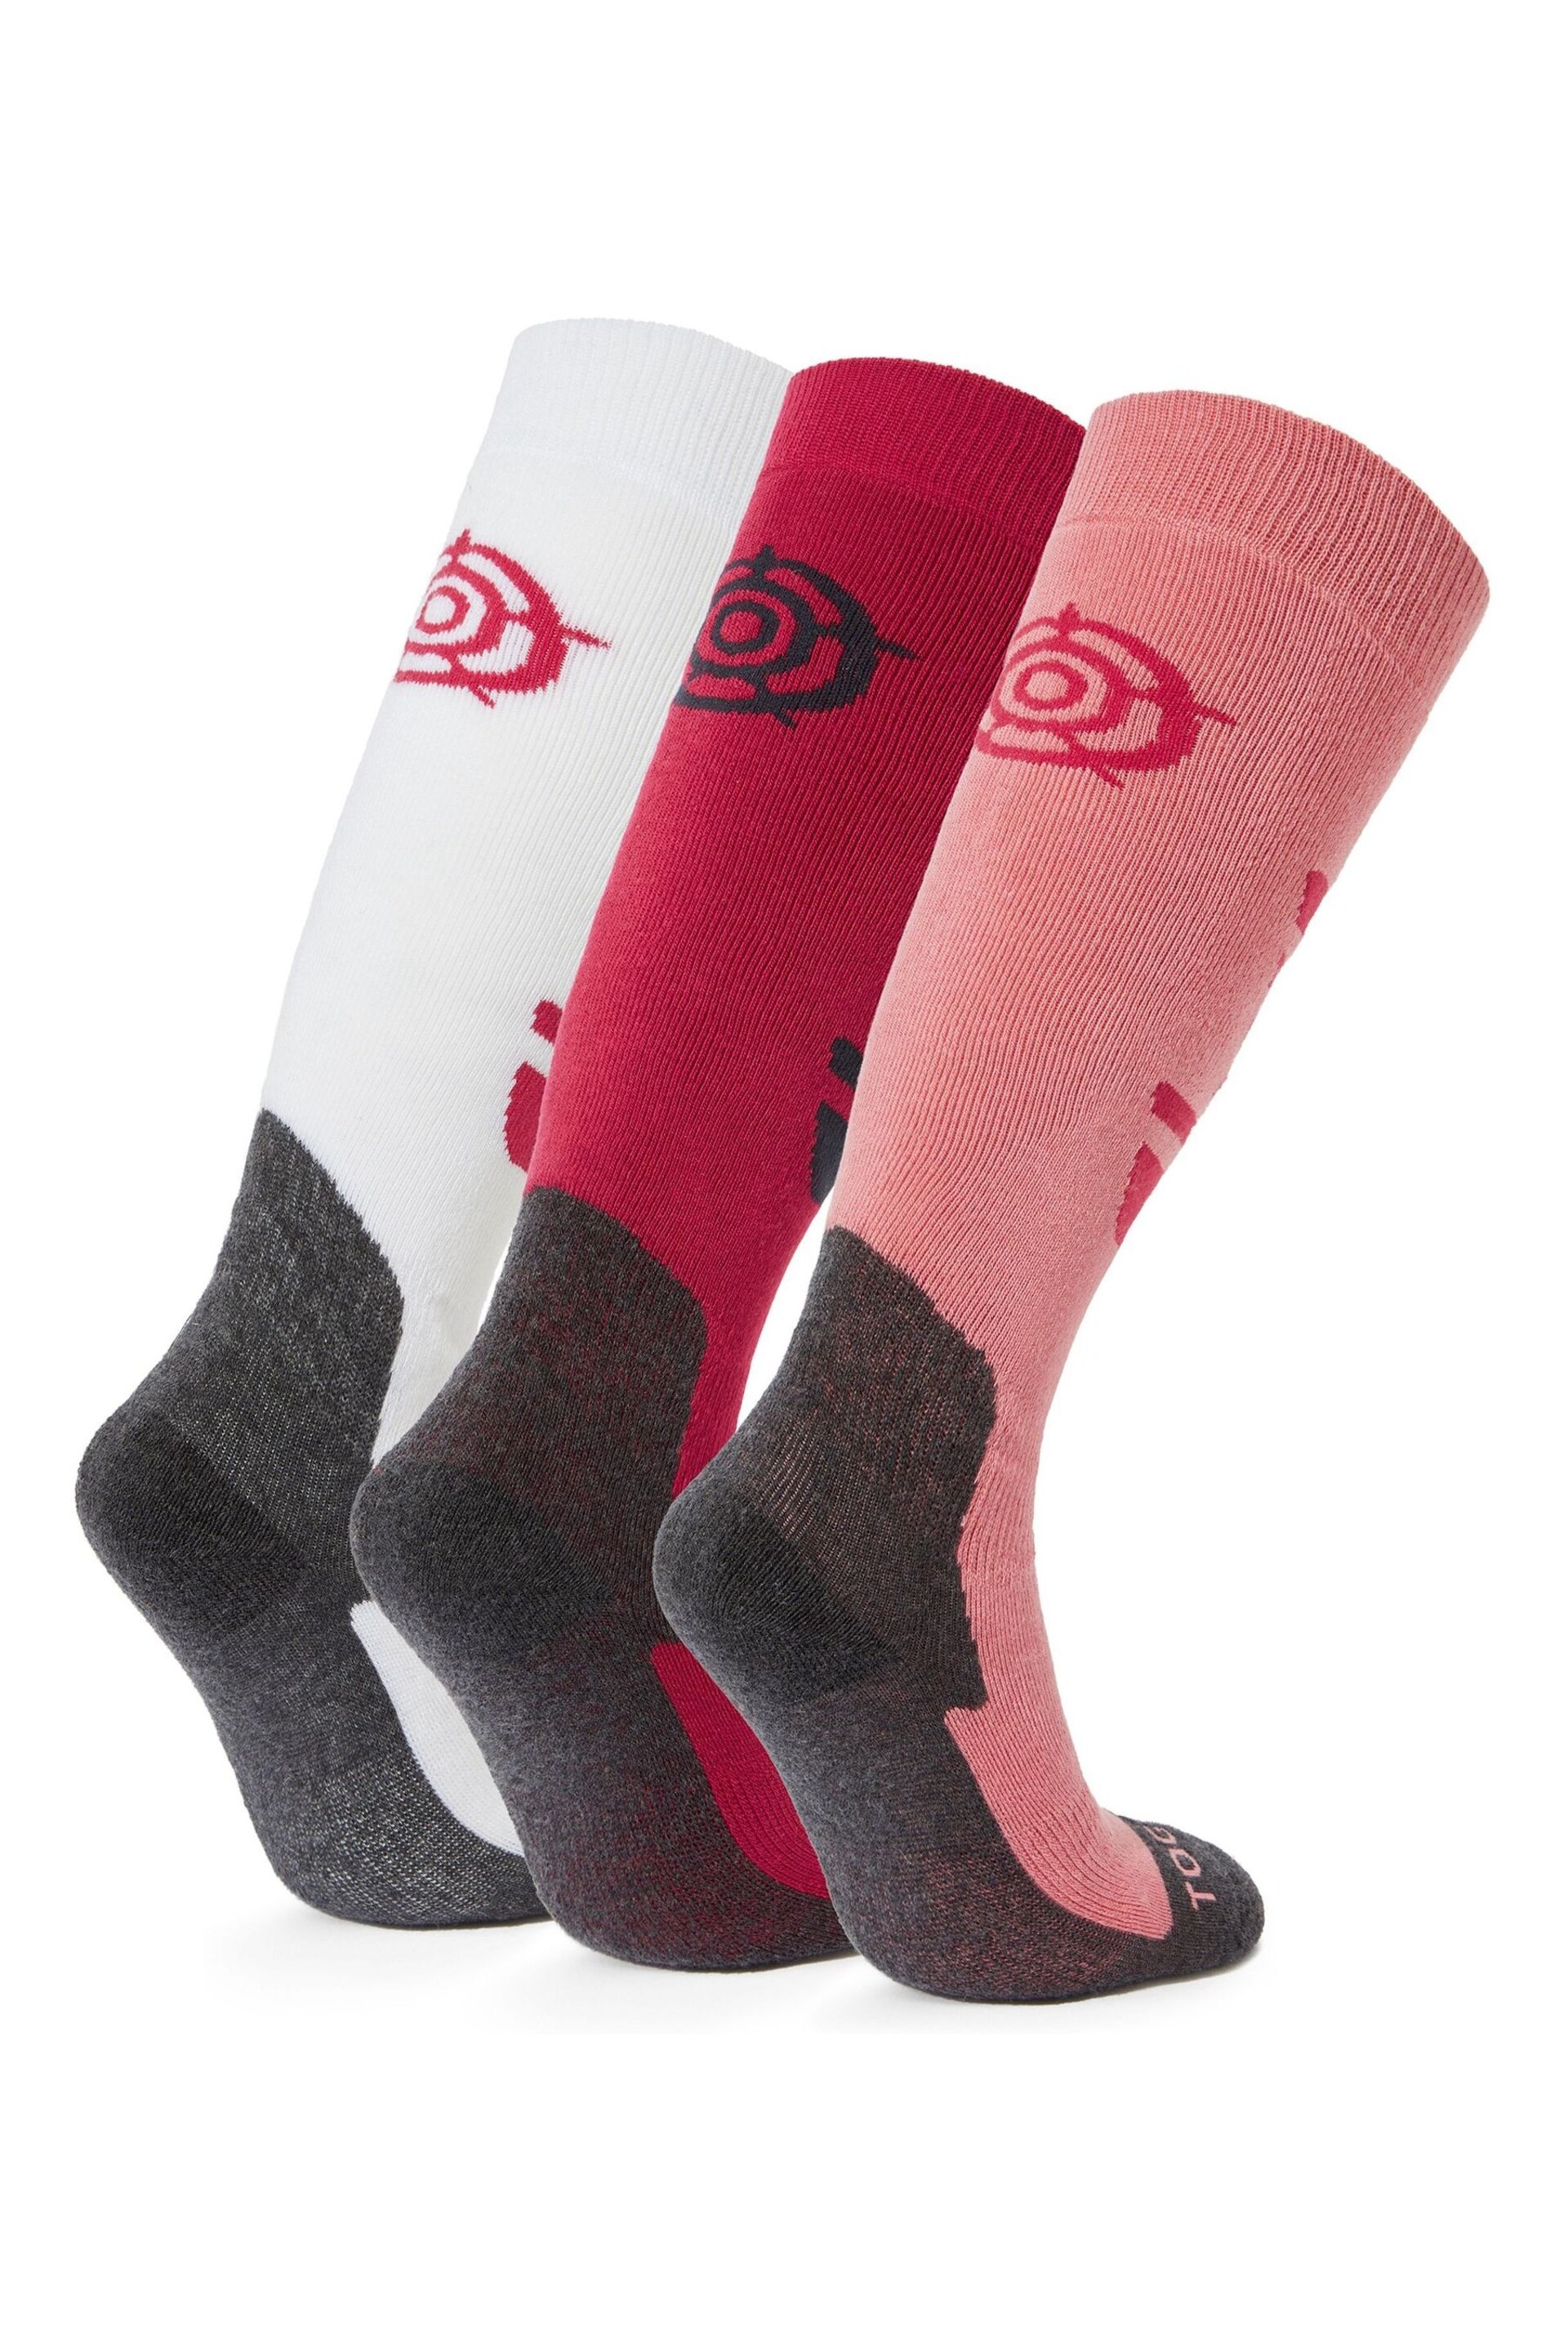 Tog 24 Pink Bergenz Ski Socks - Image 2 of 2